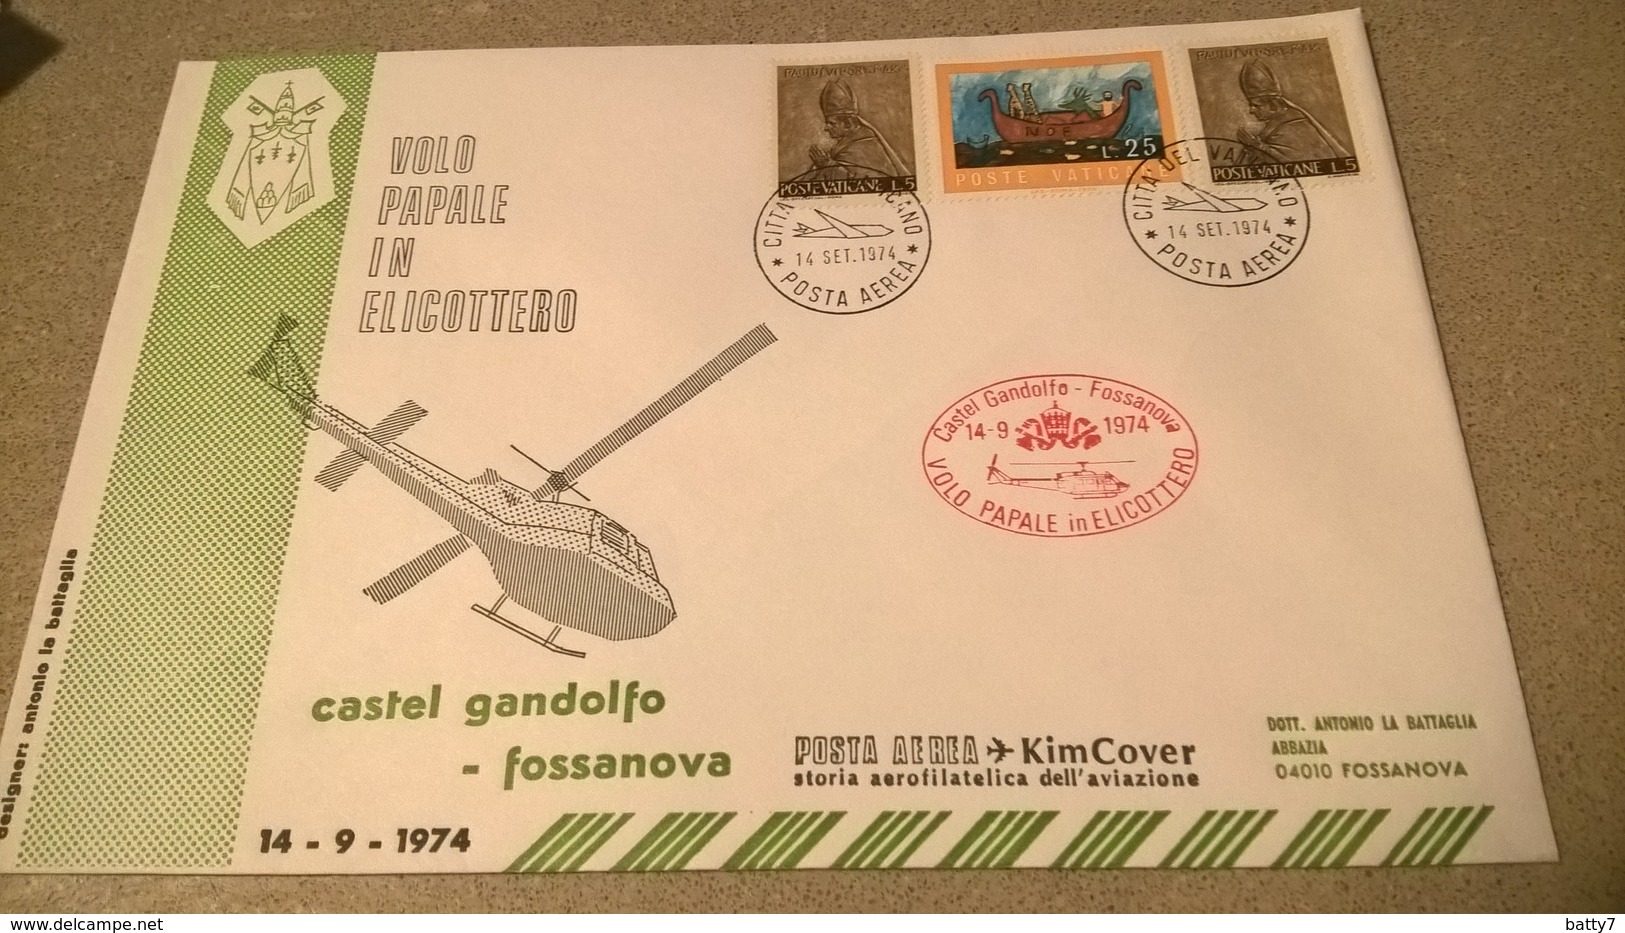 VATICANO 1974 VOLO PAPALE ELICOTTERO CASTEL GANDOLFO - FOSSANOVA - Helicopters